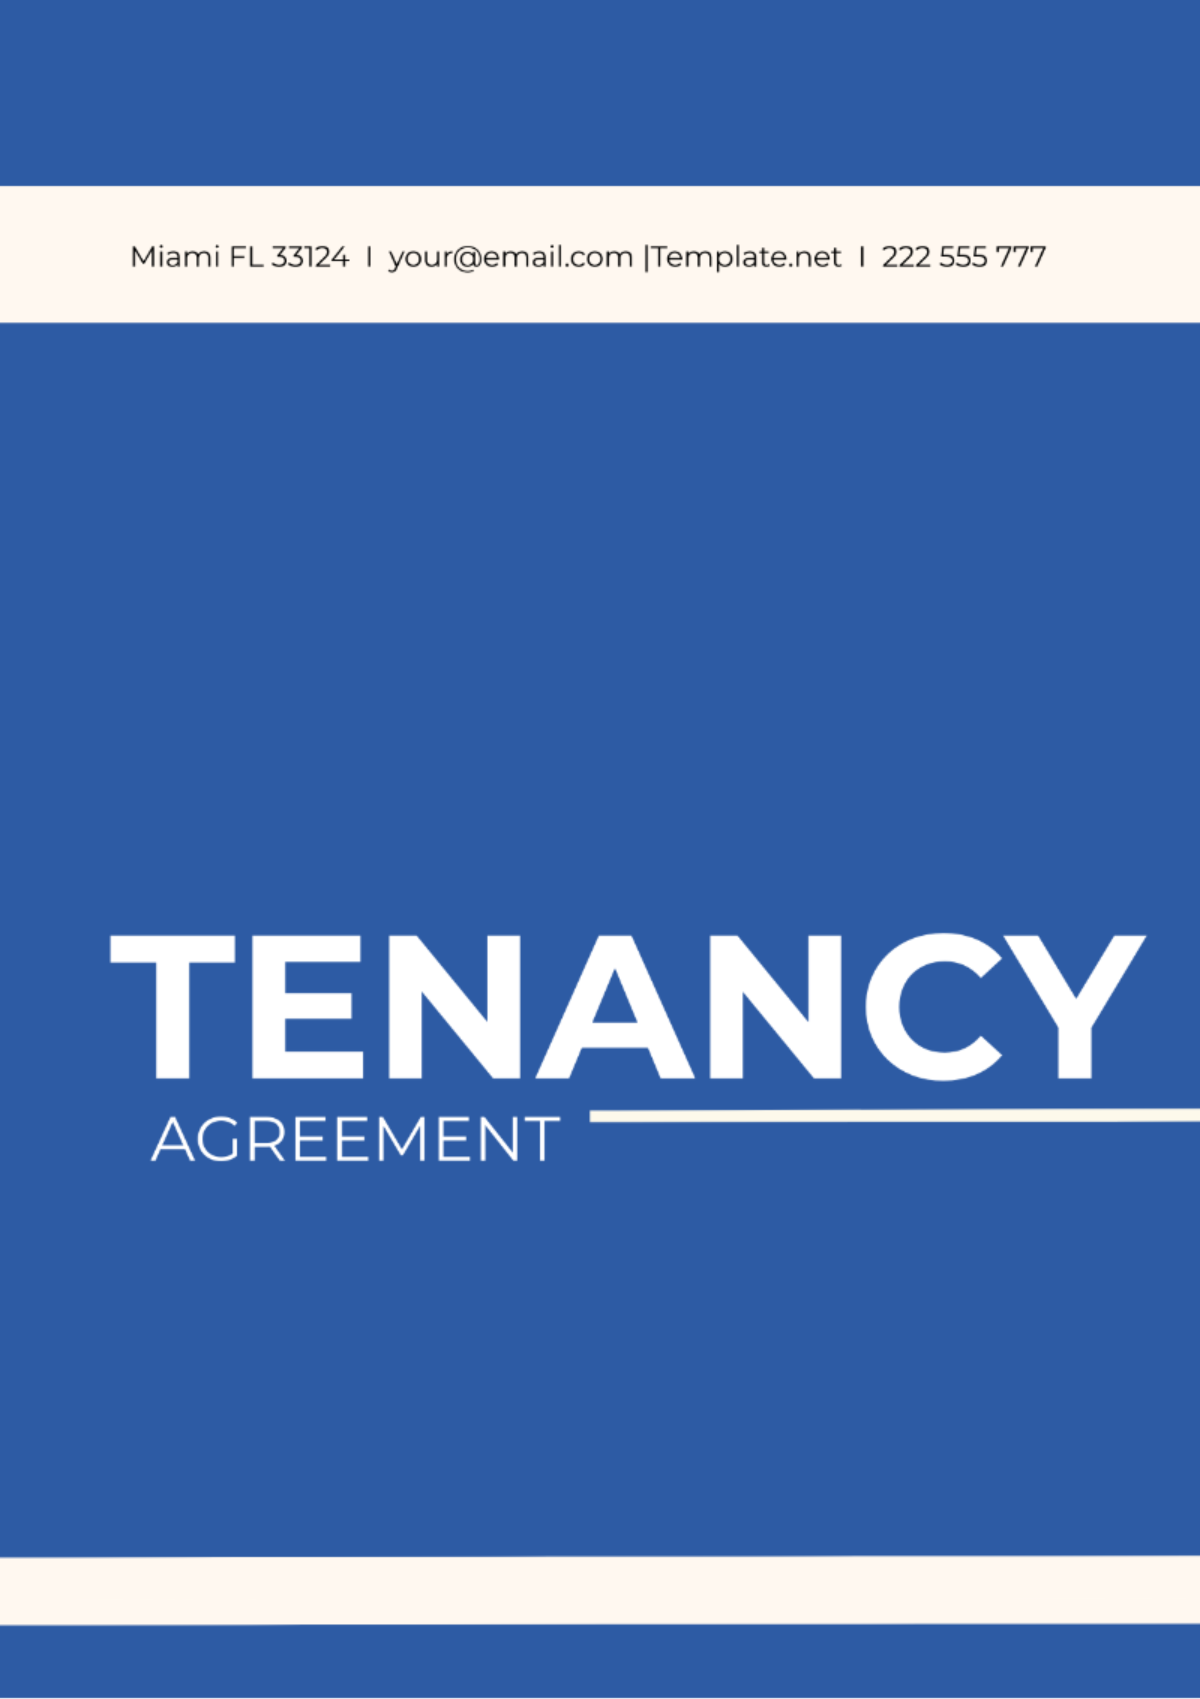 Tenancy Agreement Template